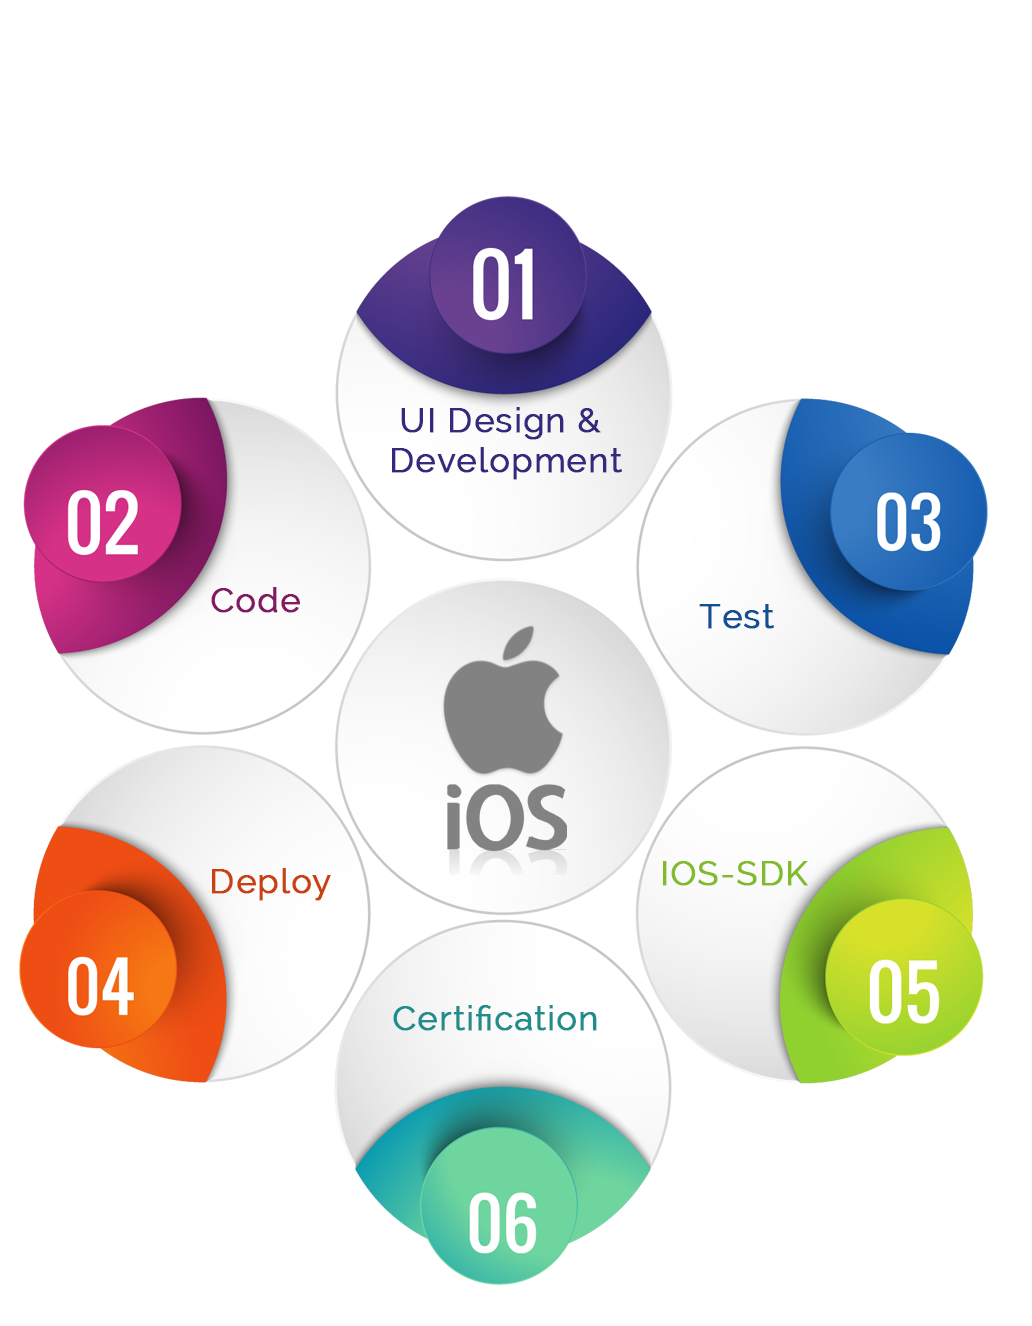 iPhone App Development Company, iPhone App Development Services UK, USA